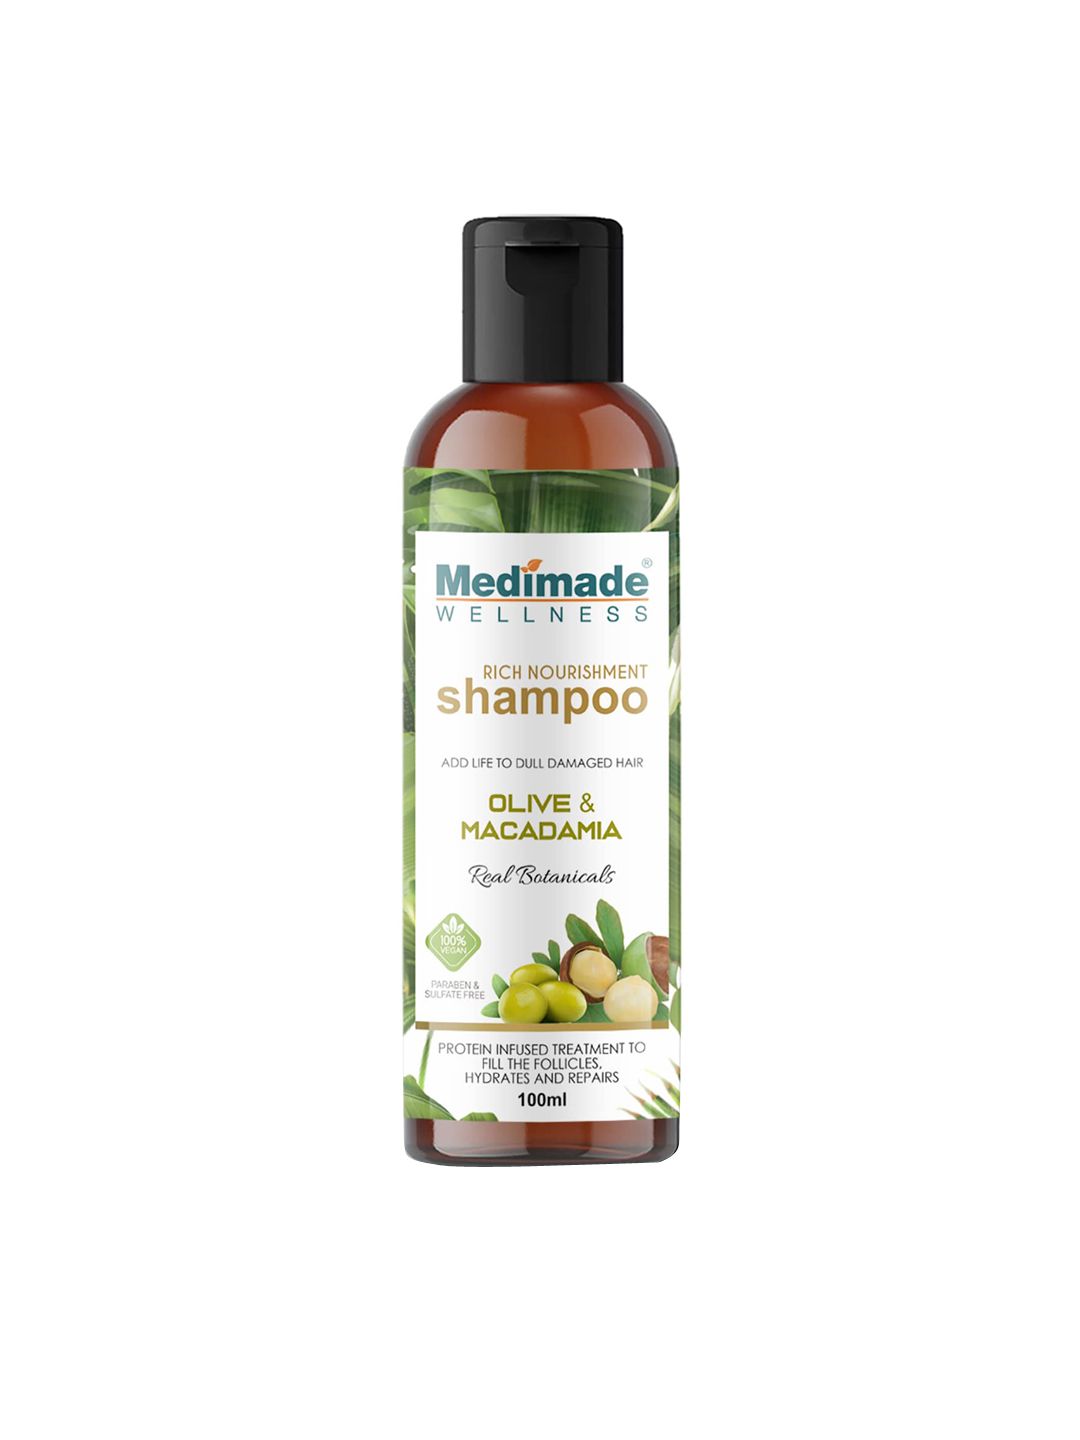 Medimade Olive and Macadamia Shampoo 100ml Price in India